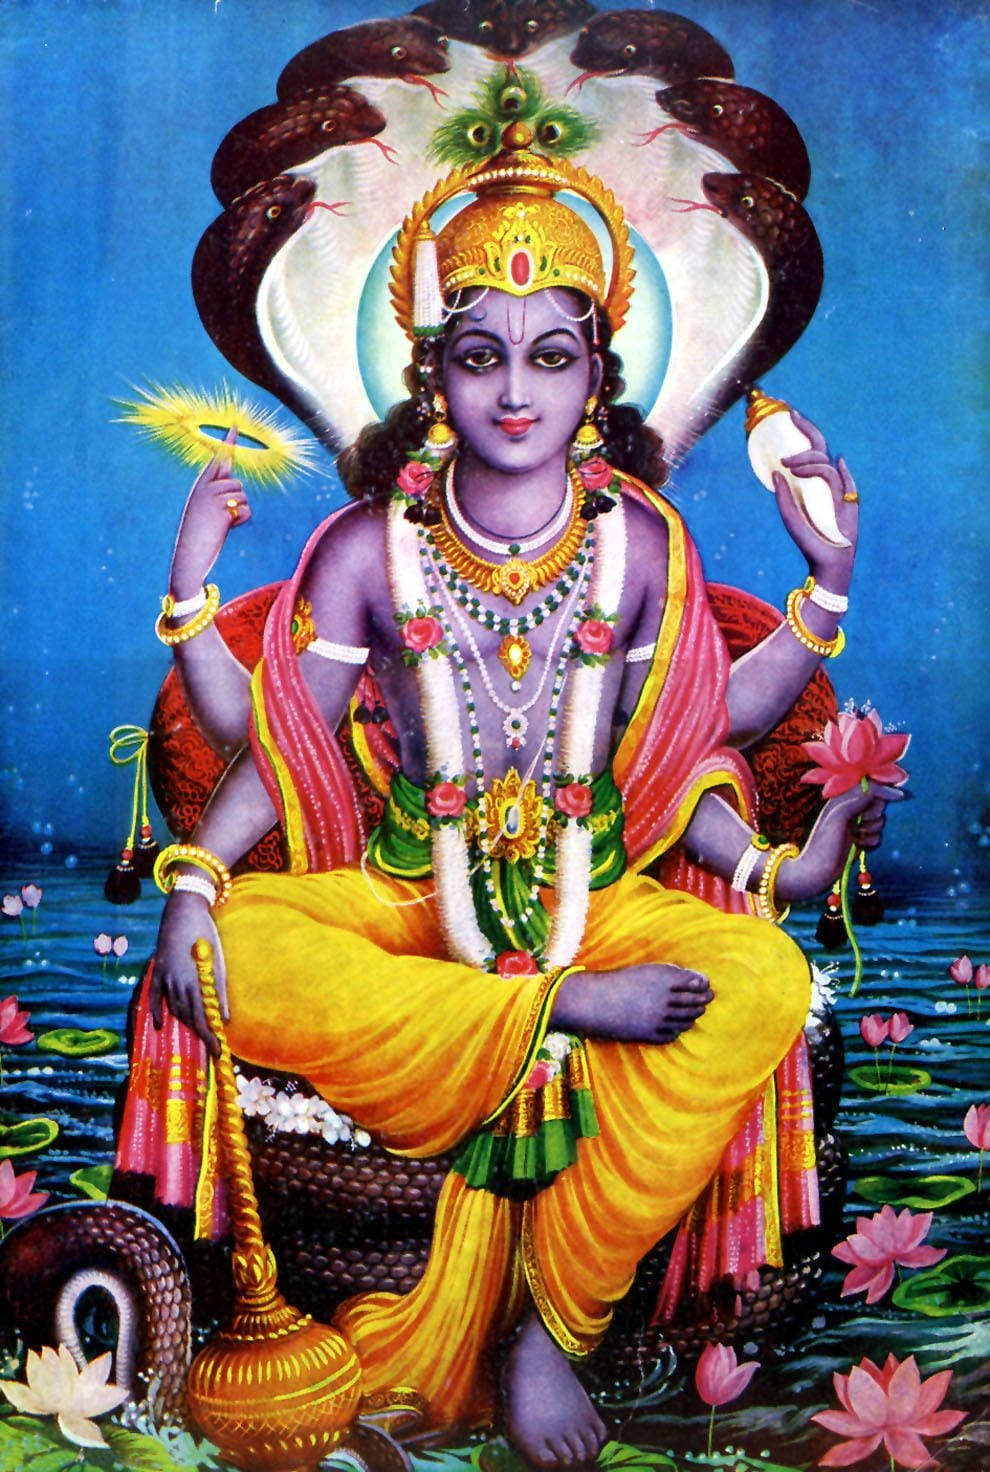 Herrevishnu Sitter I En Ormskinnstol - (lord Vishnu Sitting In A Serpent's Chair) Wallpaper